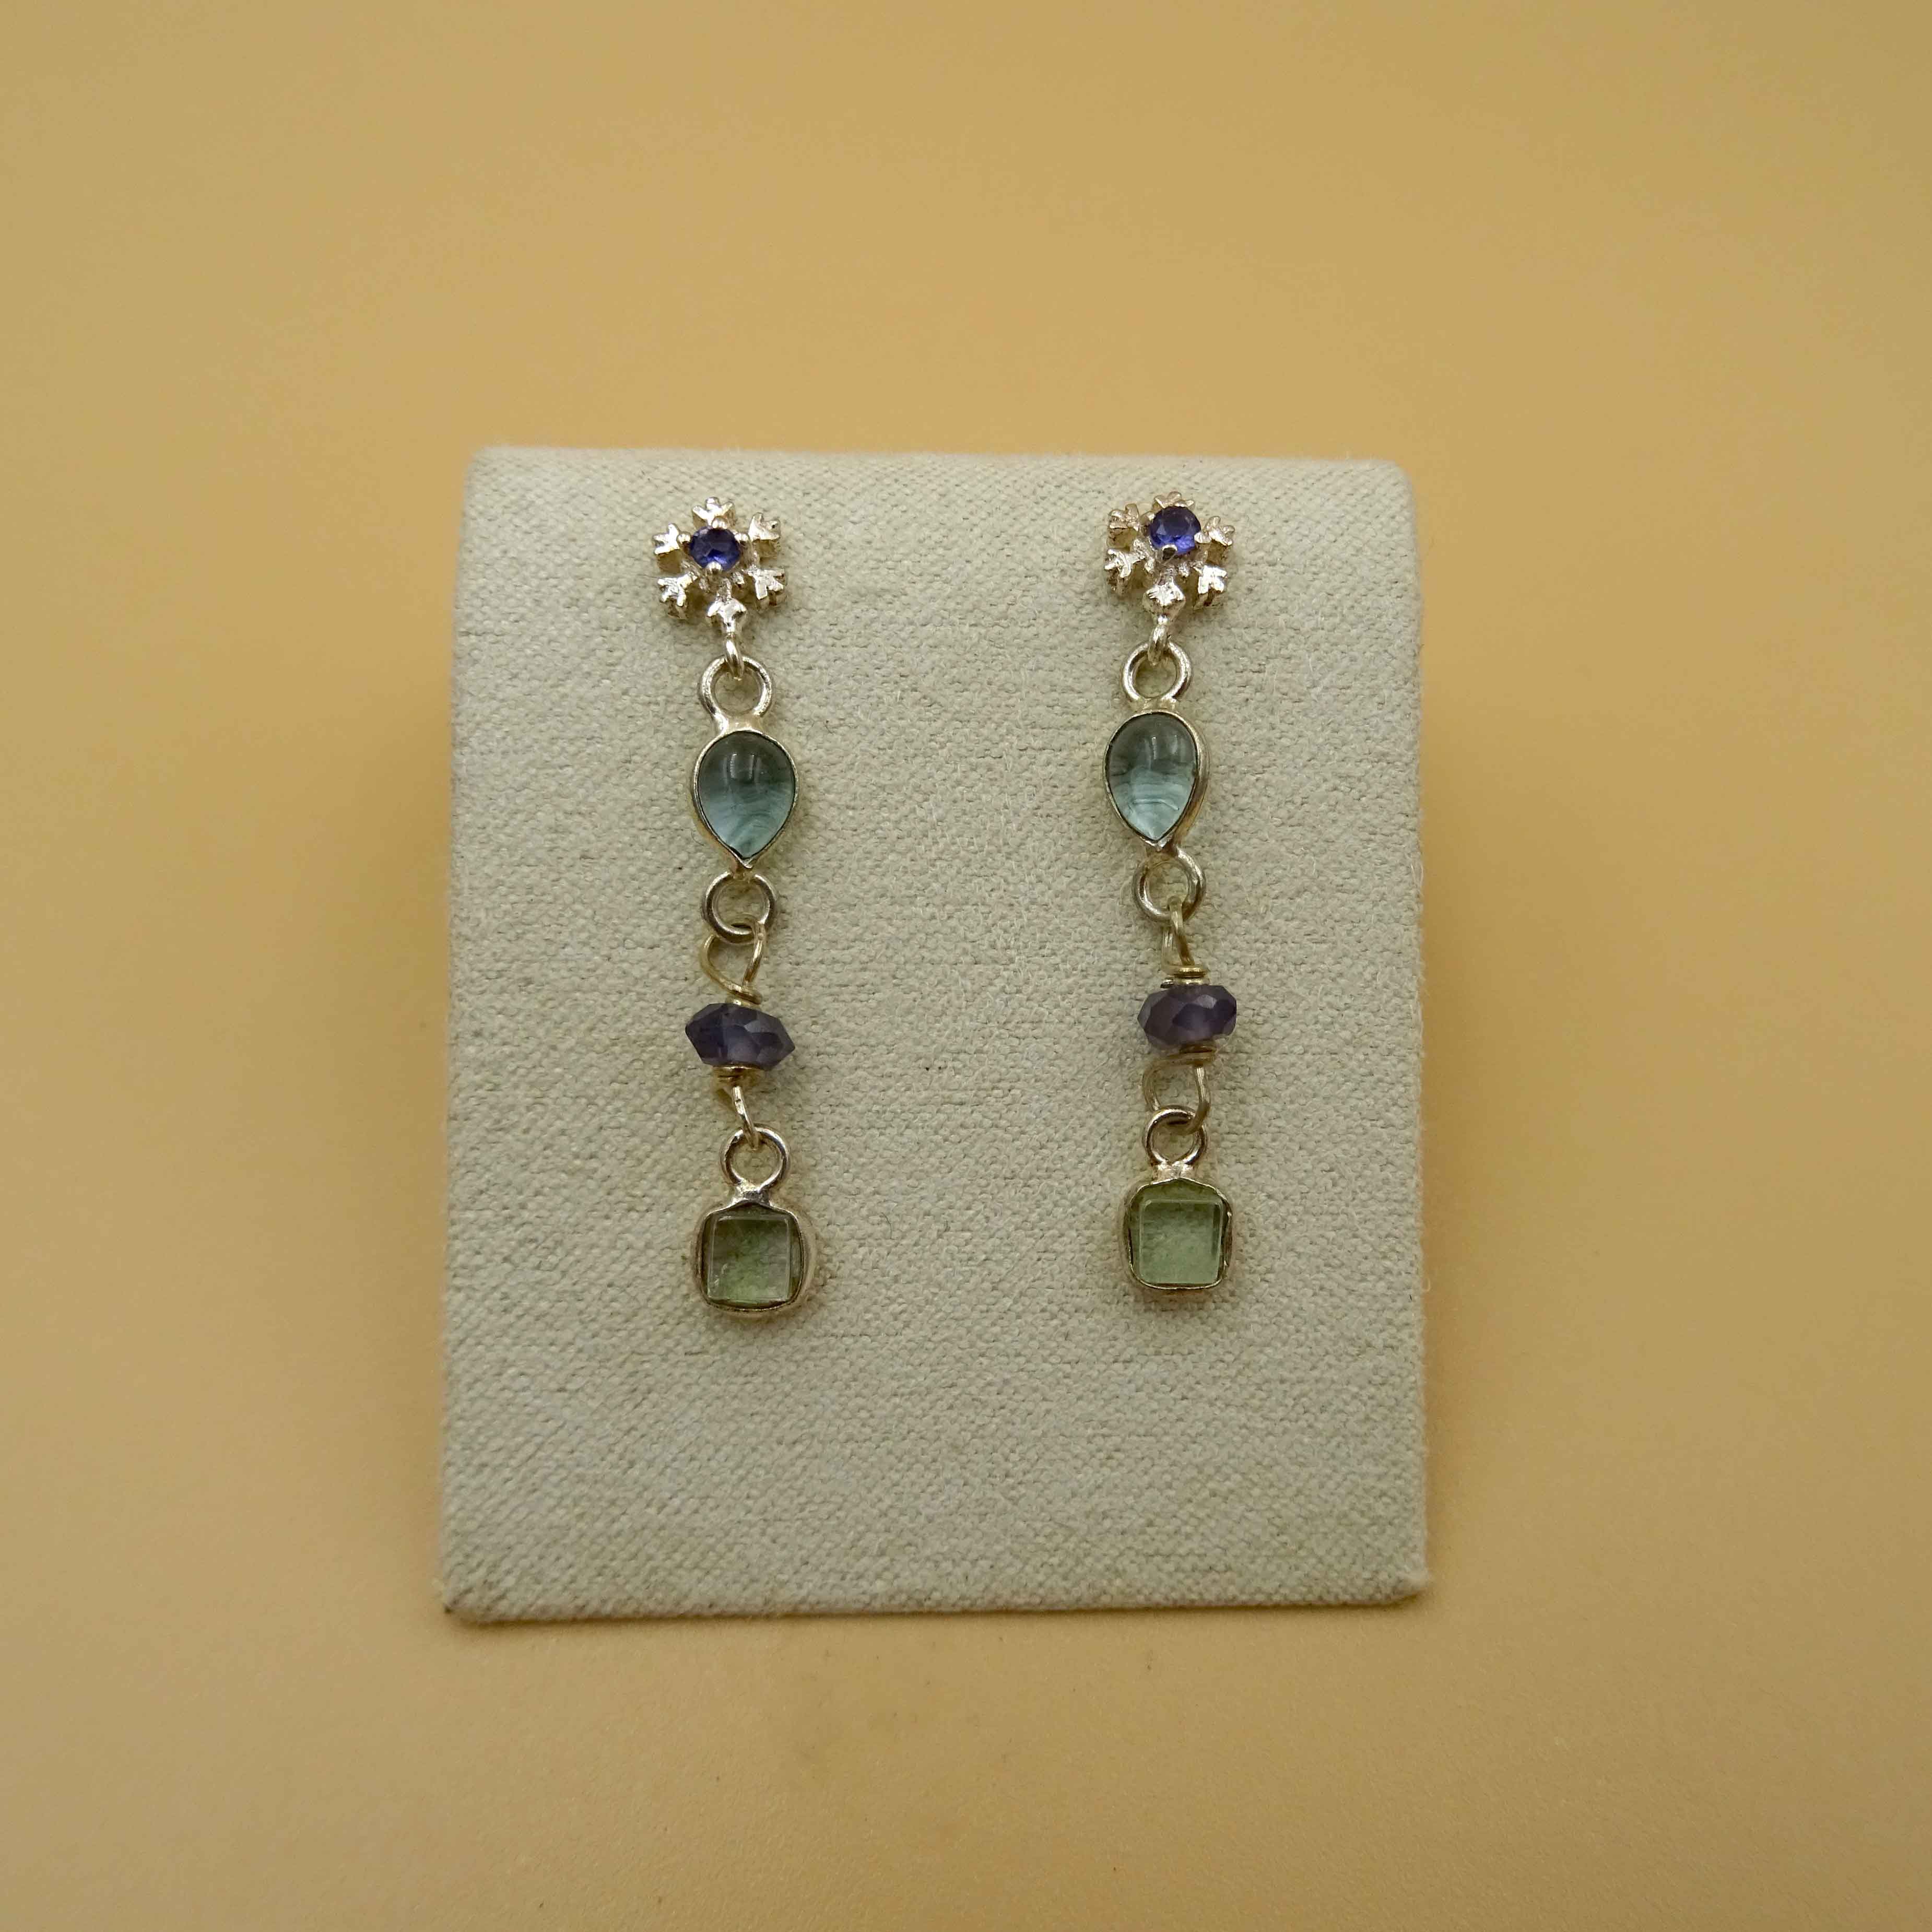 Snowflake silver earring with gemstone iolite,blue topaz ,tourmaline